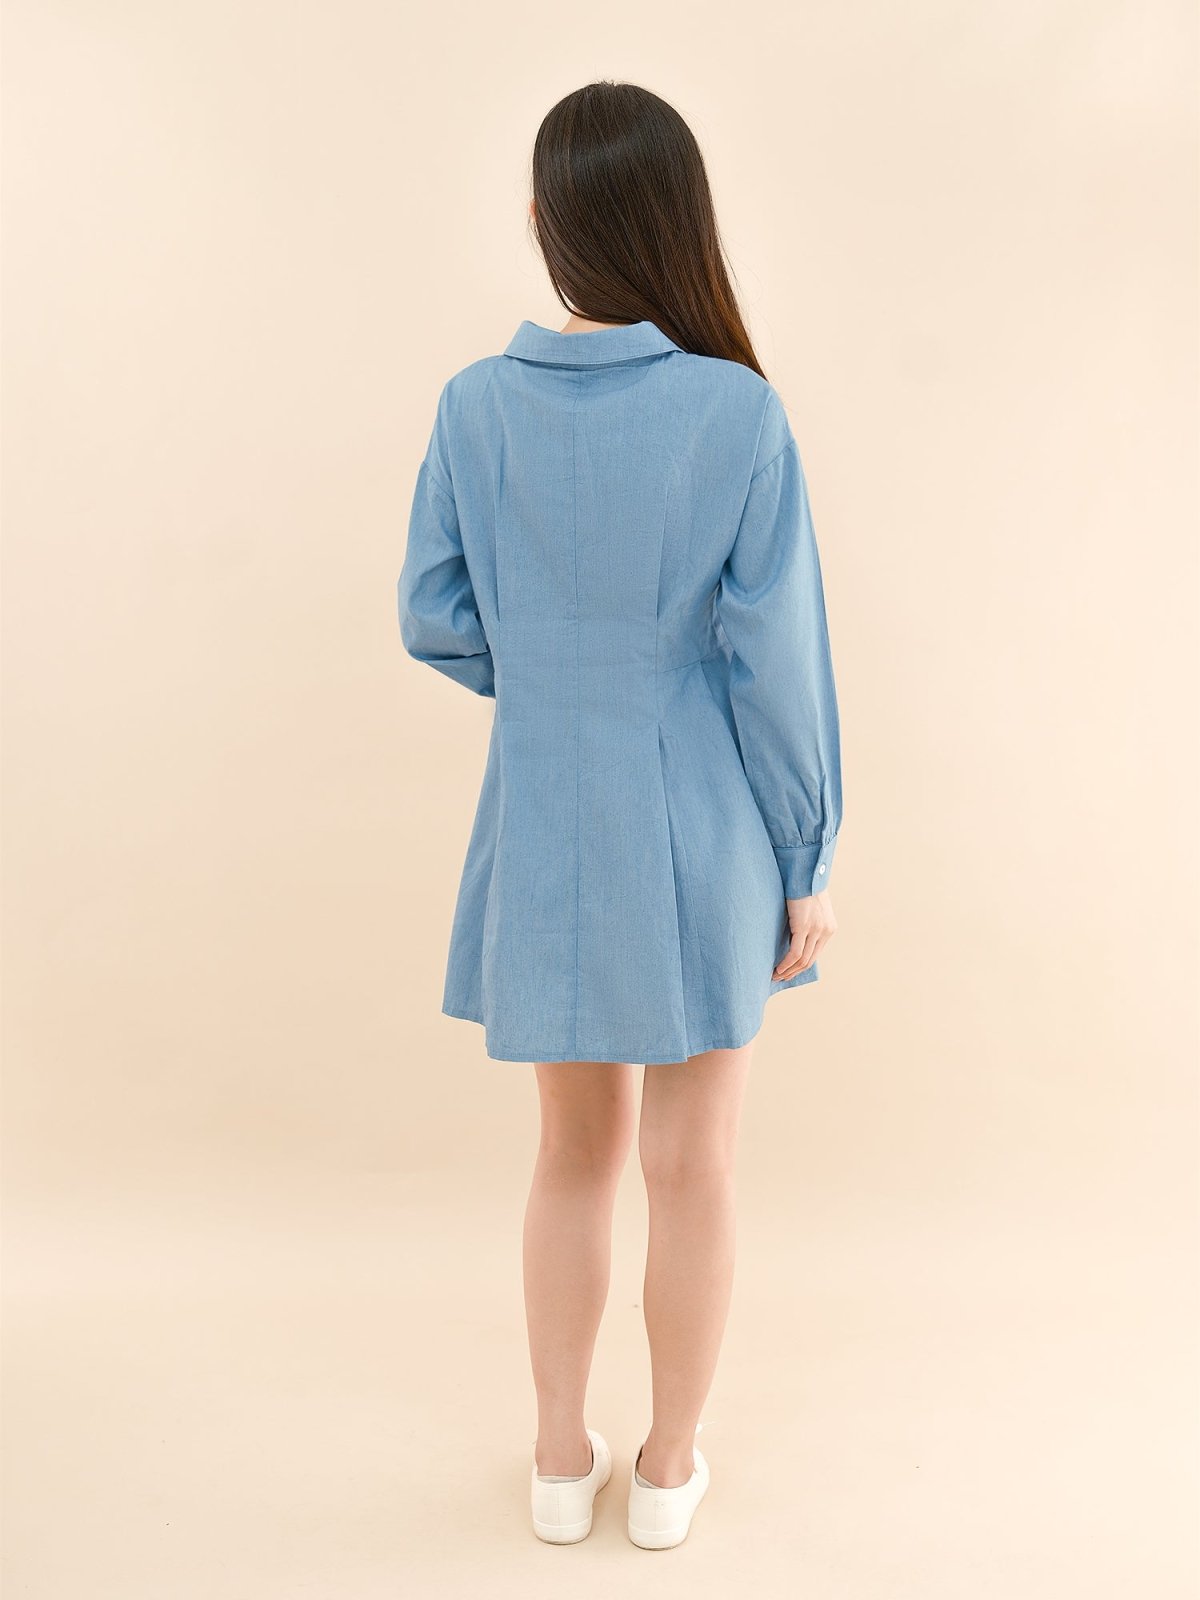 Fitted Chambray Shirt Dress - DAG-DD9045-22LightDenimS - Baby Blue - S - D'ZAGE Designs